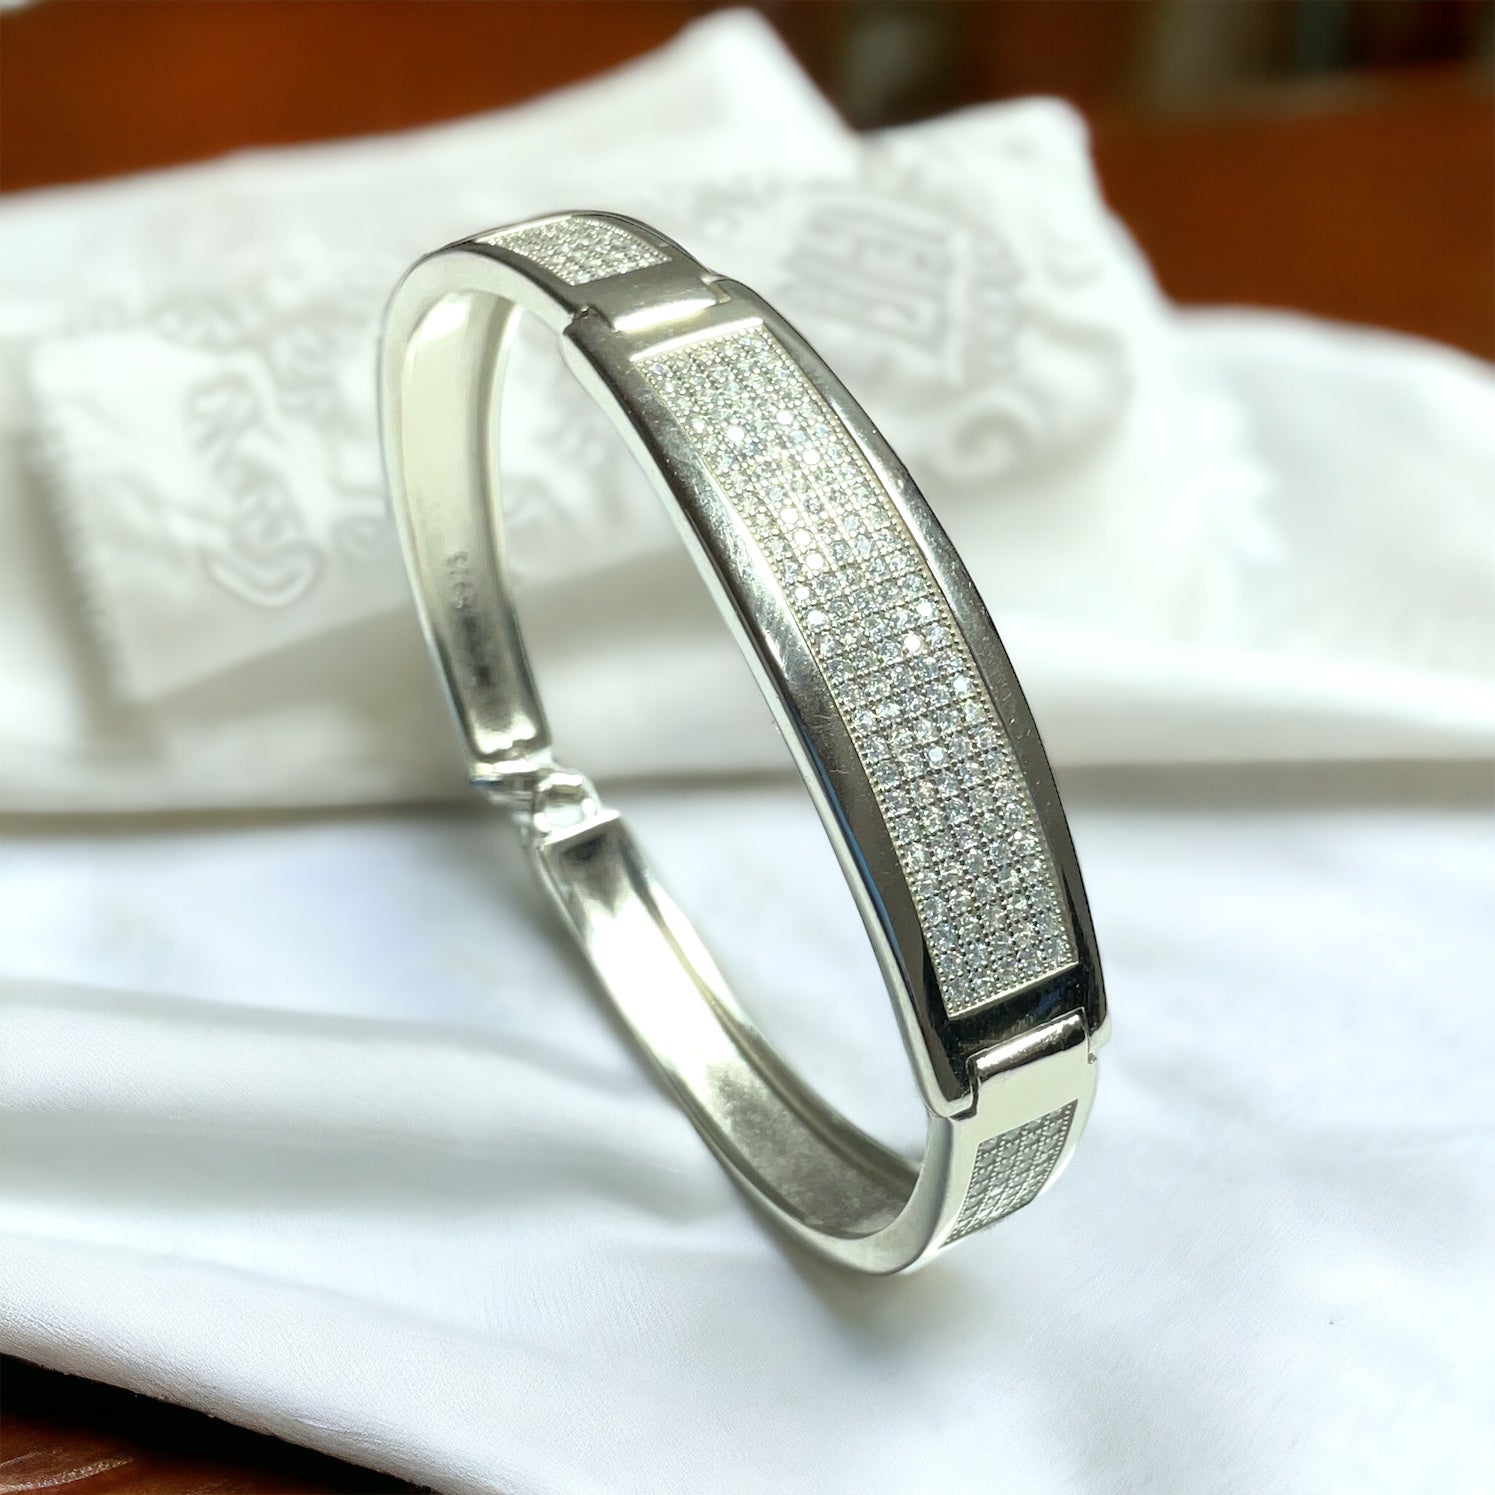 a close up of a silver bracelet on a white cloth